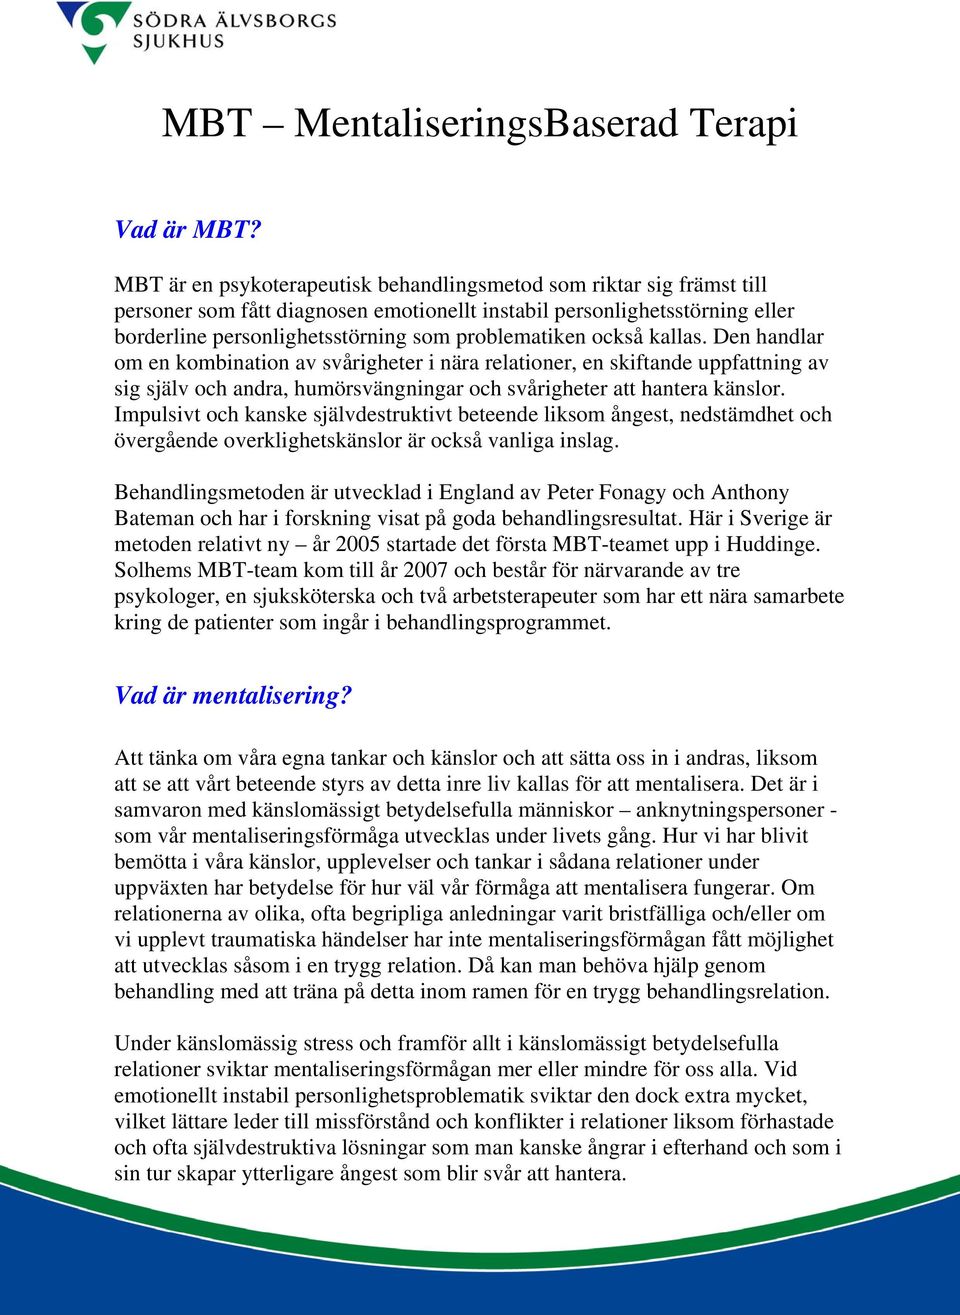 MBT - MentaliseringsBaserad Terapi - PDF Free Download